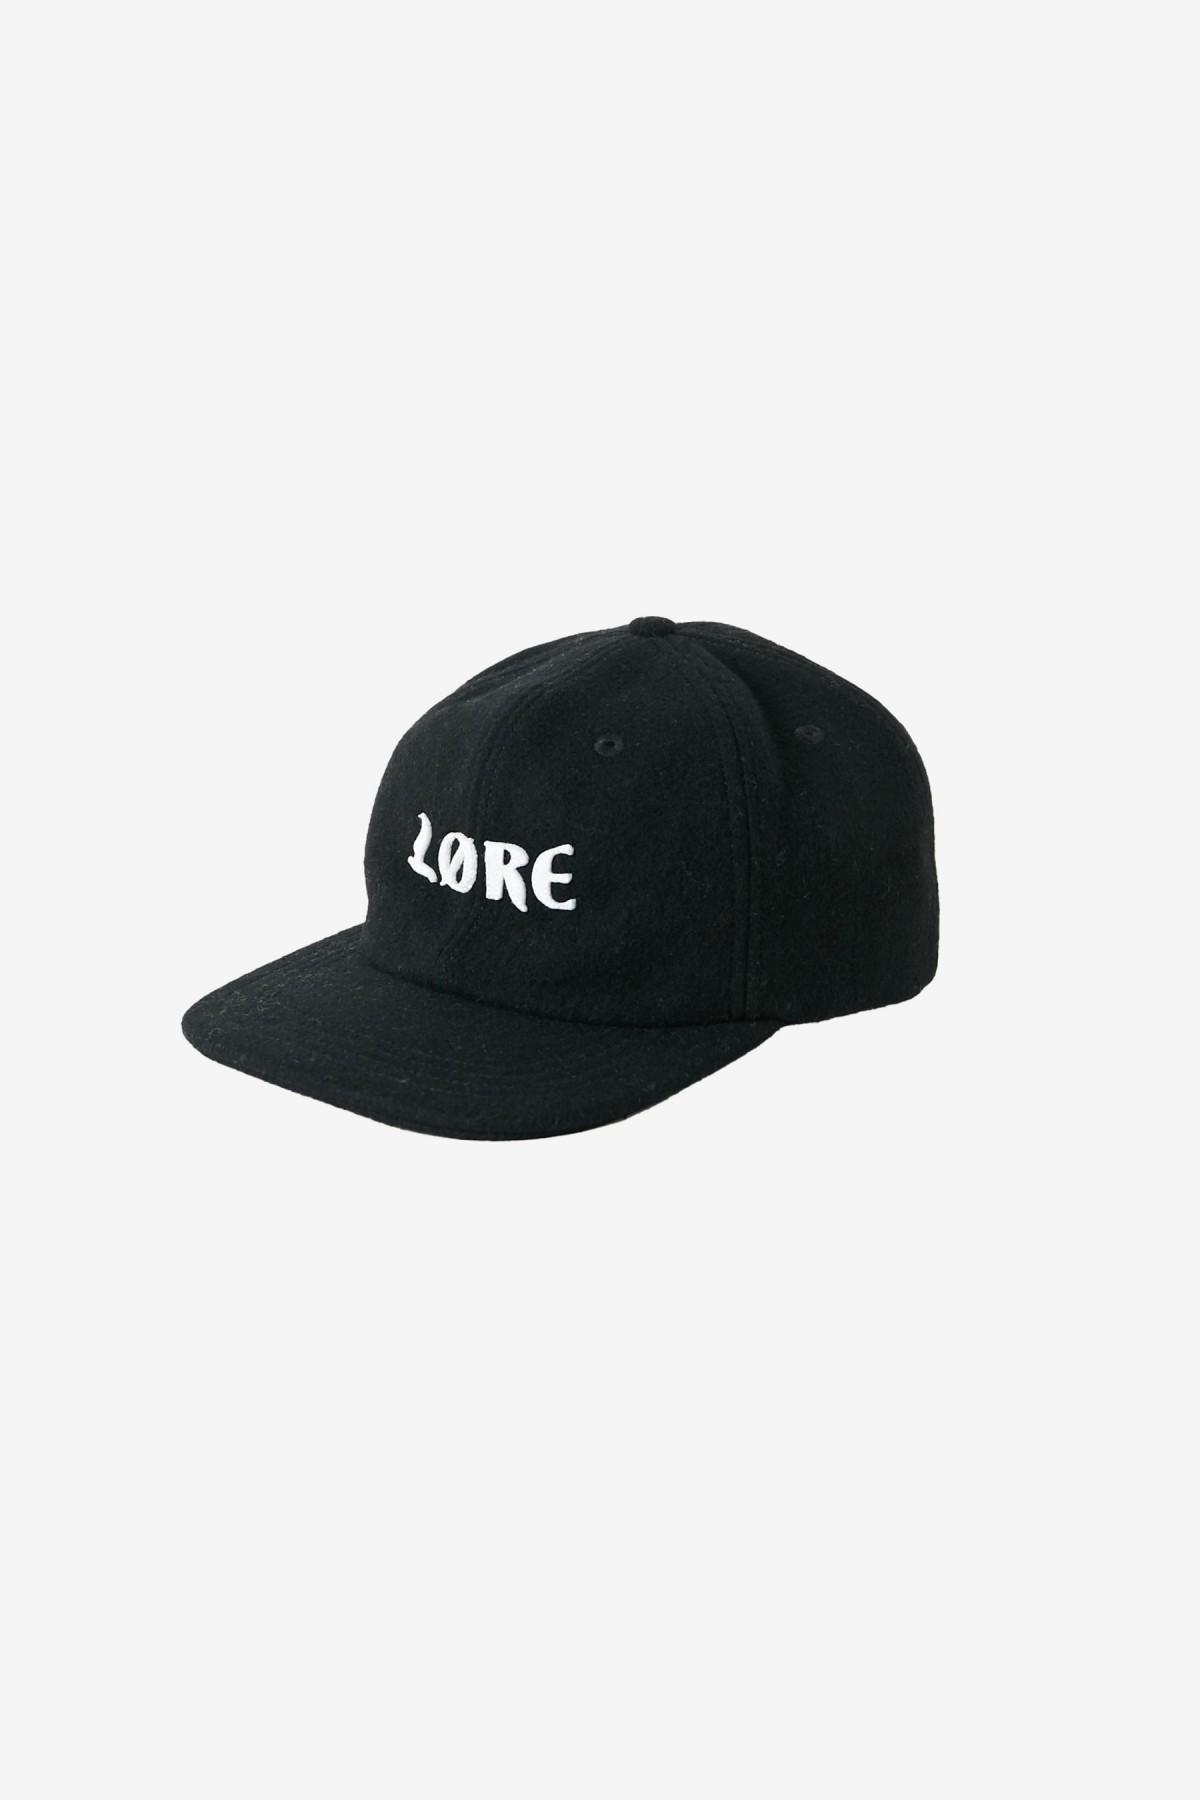 Heresy Lore Cap in Black